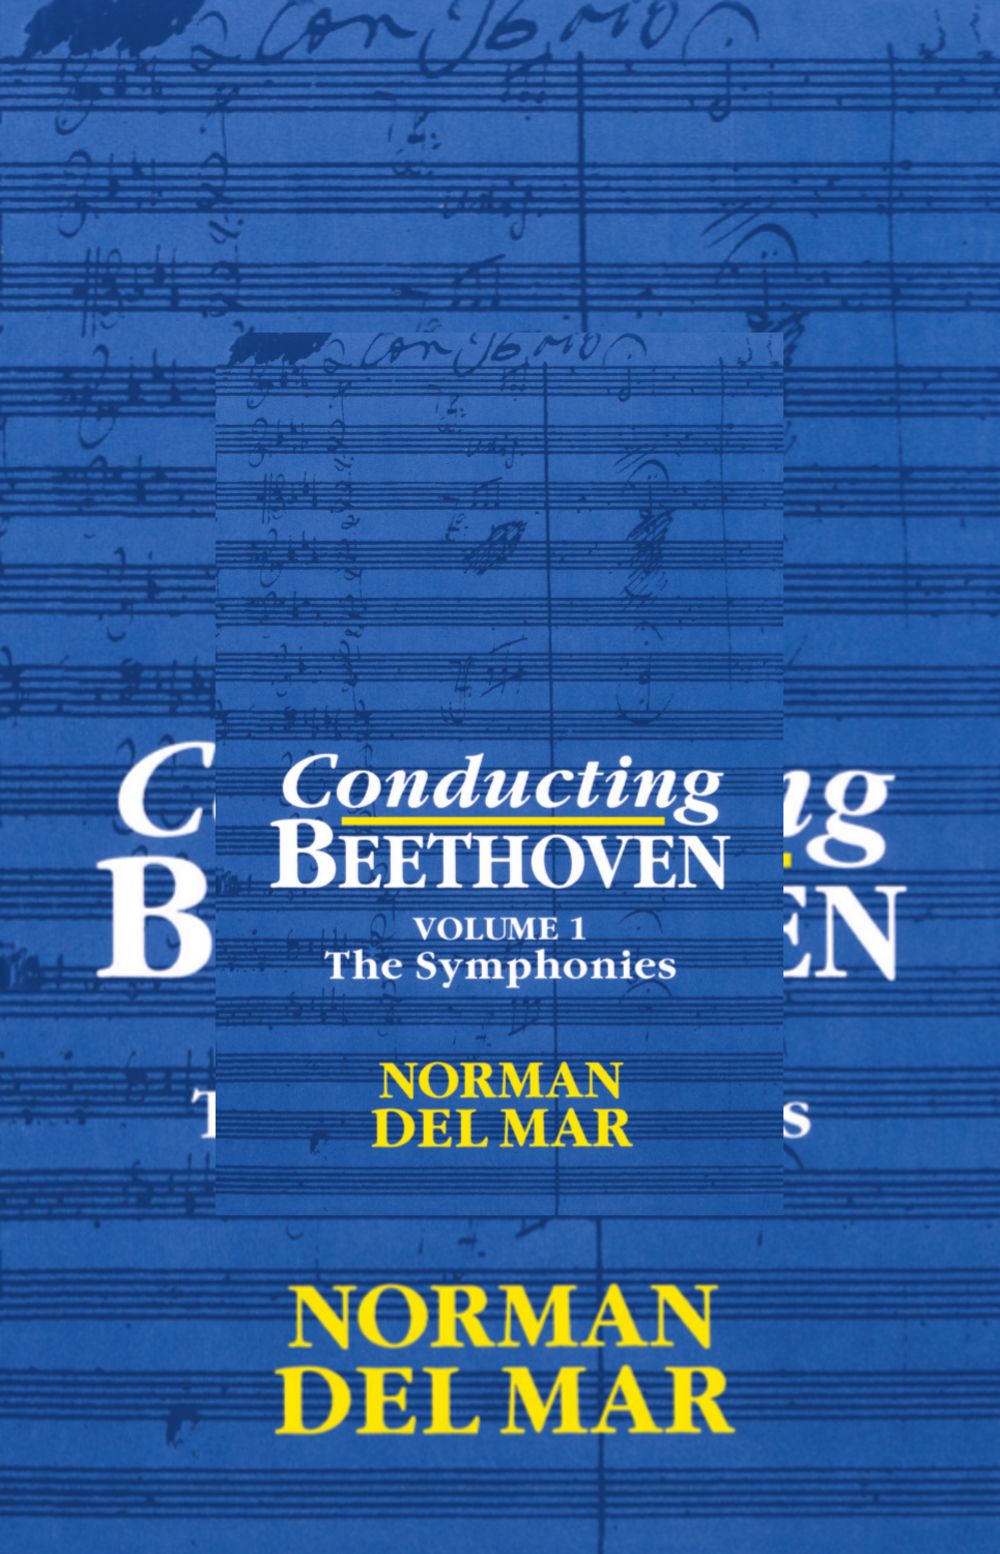 Del Mar Conducting Beethoven Volume 1 Paperback Sheet Music Songbook